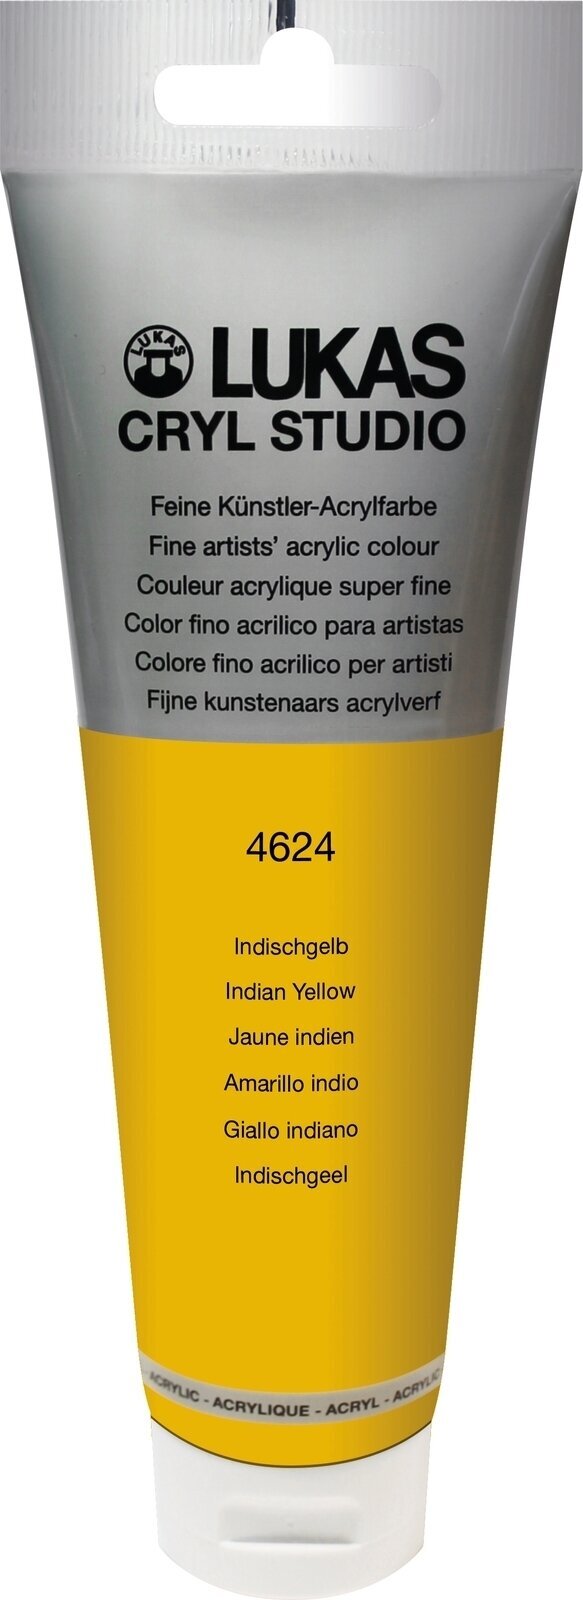 Akrylová farba Lukas Cryl Studio Acrylic Paint Plastic Tube Akrylová farba Indian Yellow 125 ml 1 ks